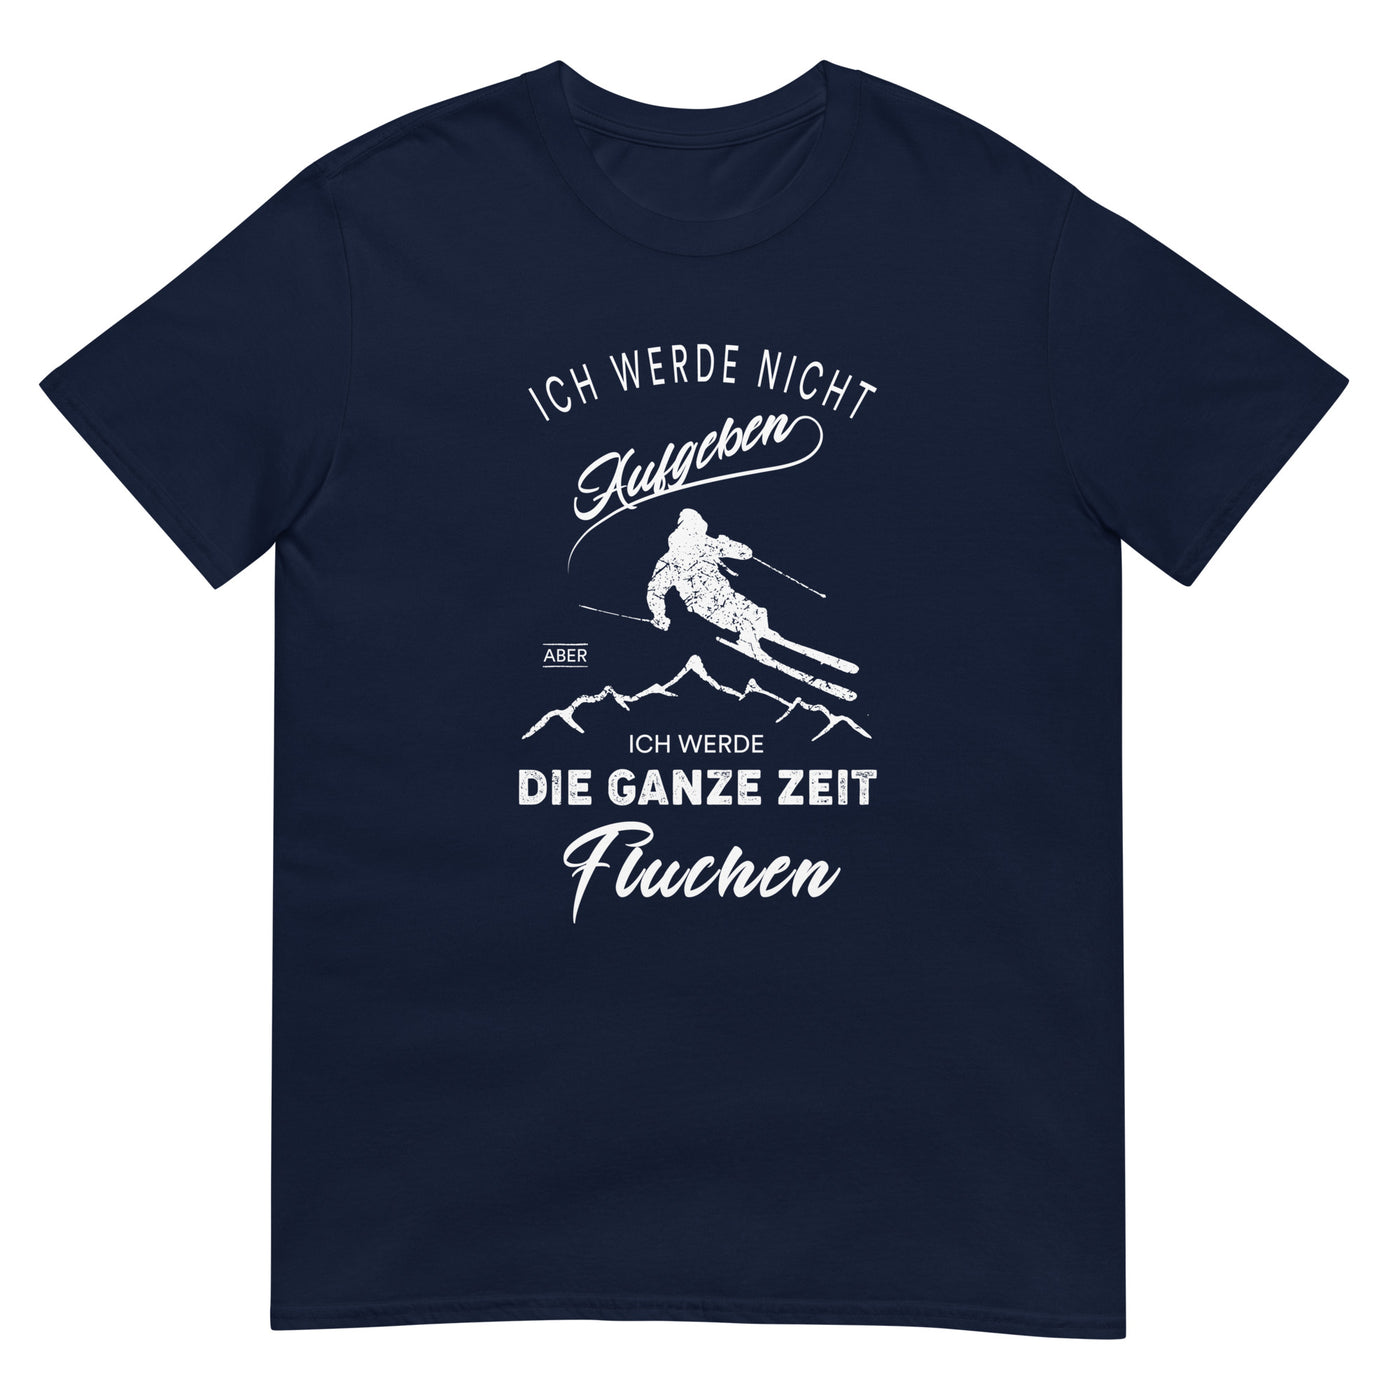 Nicht aufgeben aber fluchen - Ski - T-Shirt (Unisex) klettern ski xxx yyy zzz Navy